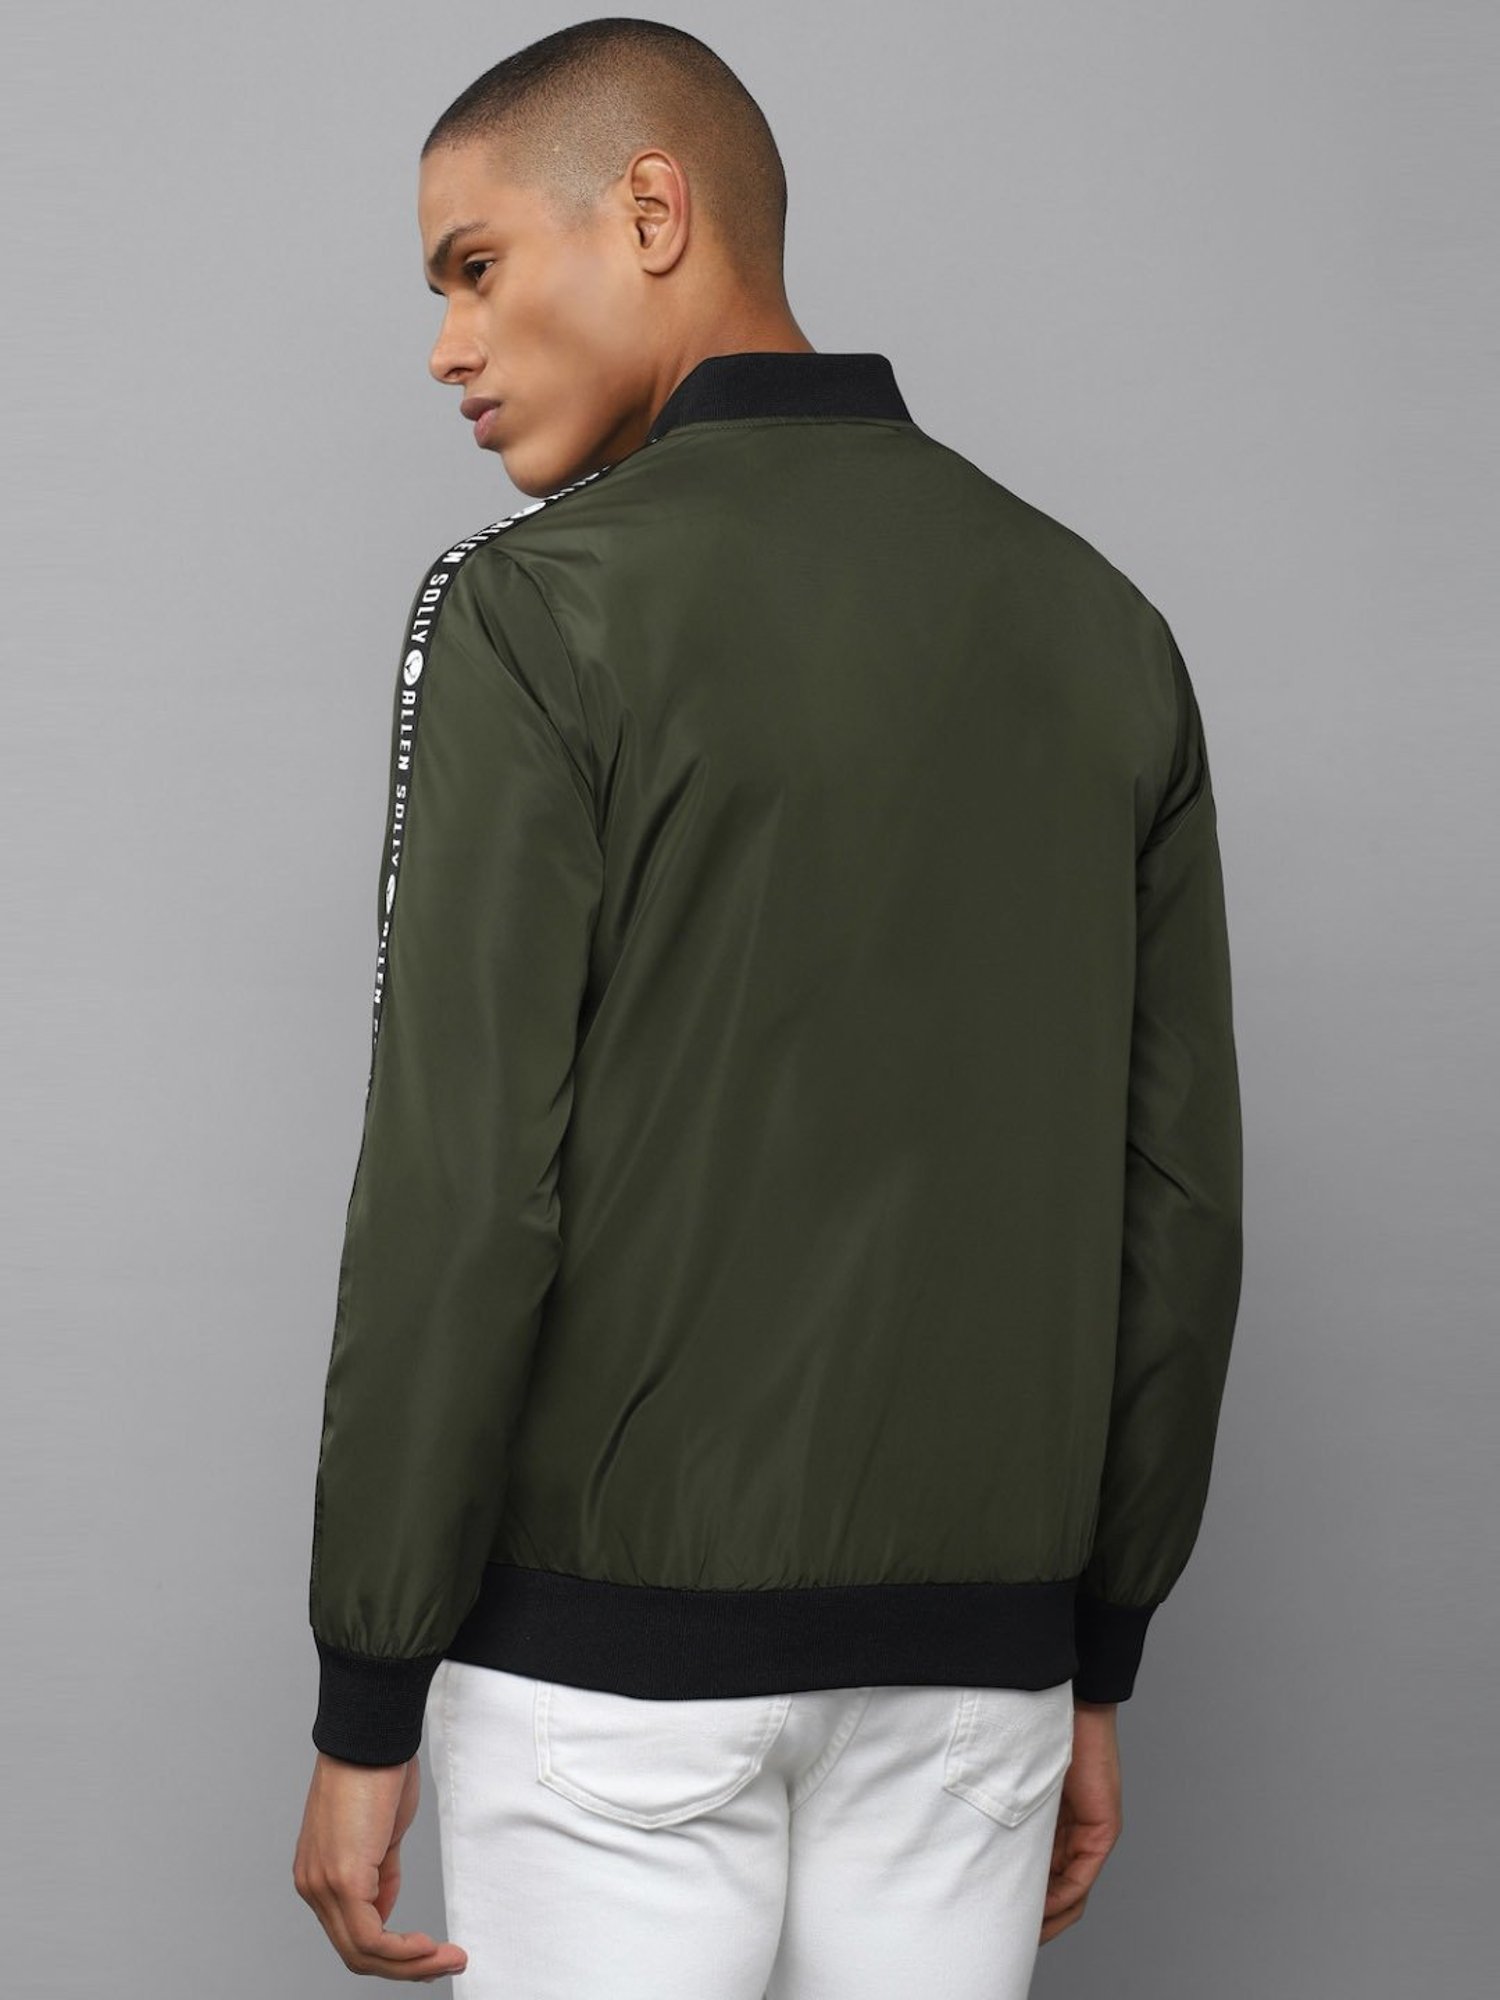 Allen Solly Men's Regular Fit Jacket | Jackets, Mens jackets casual, Mens  jackets